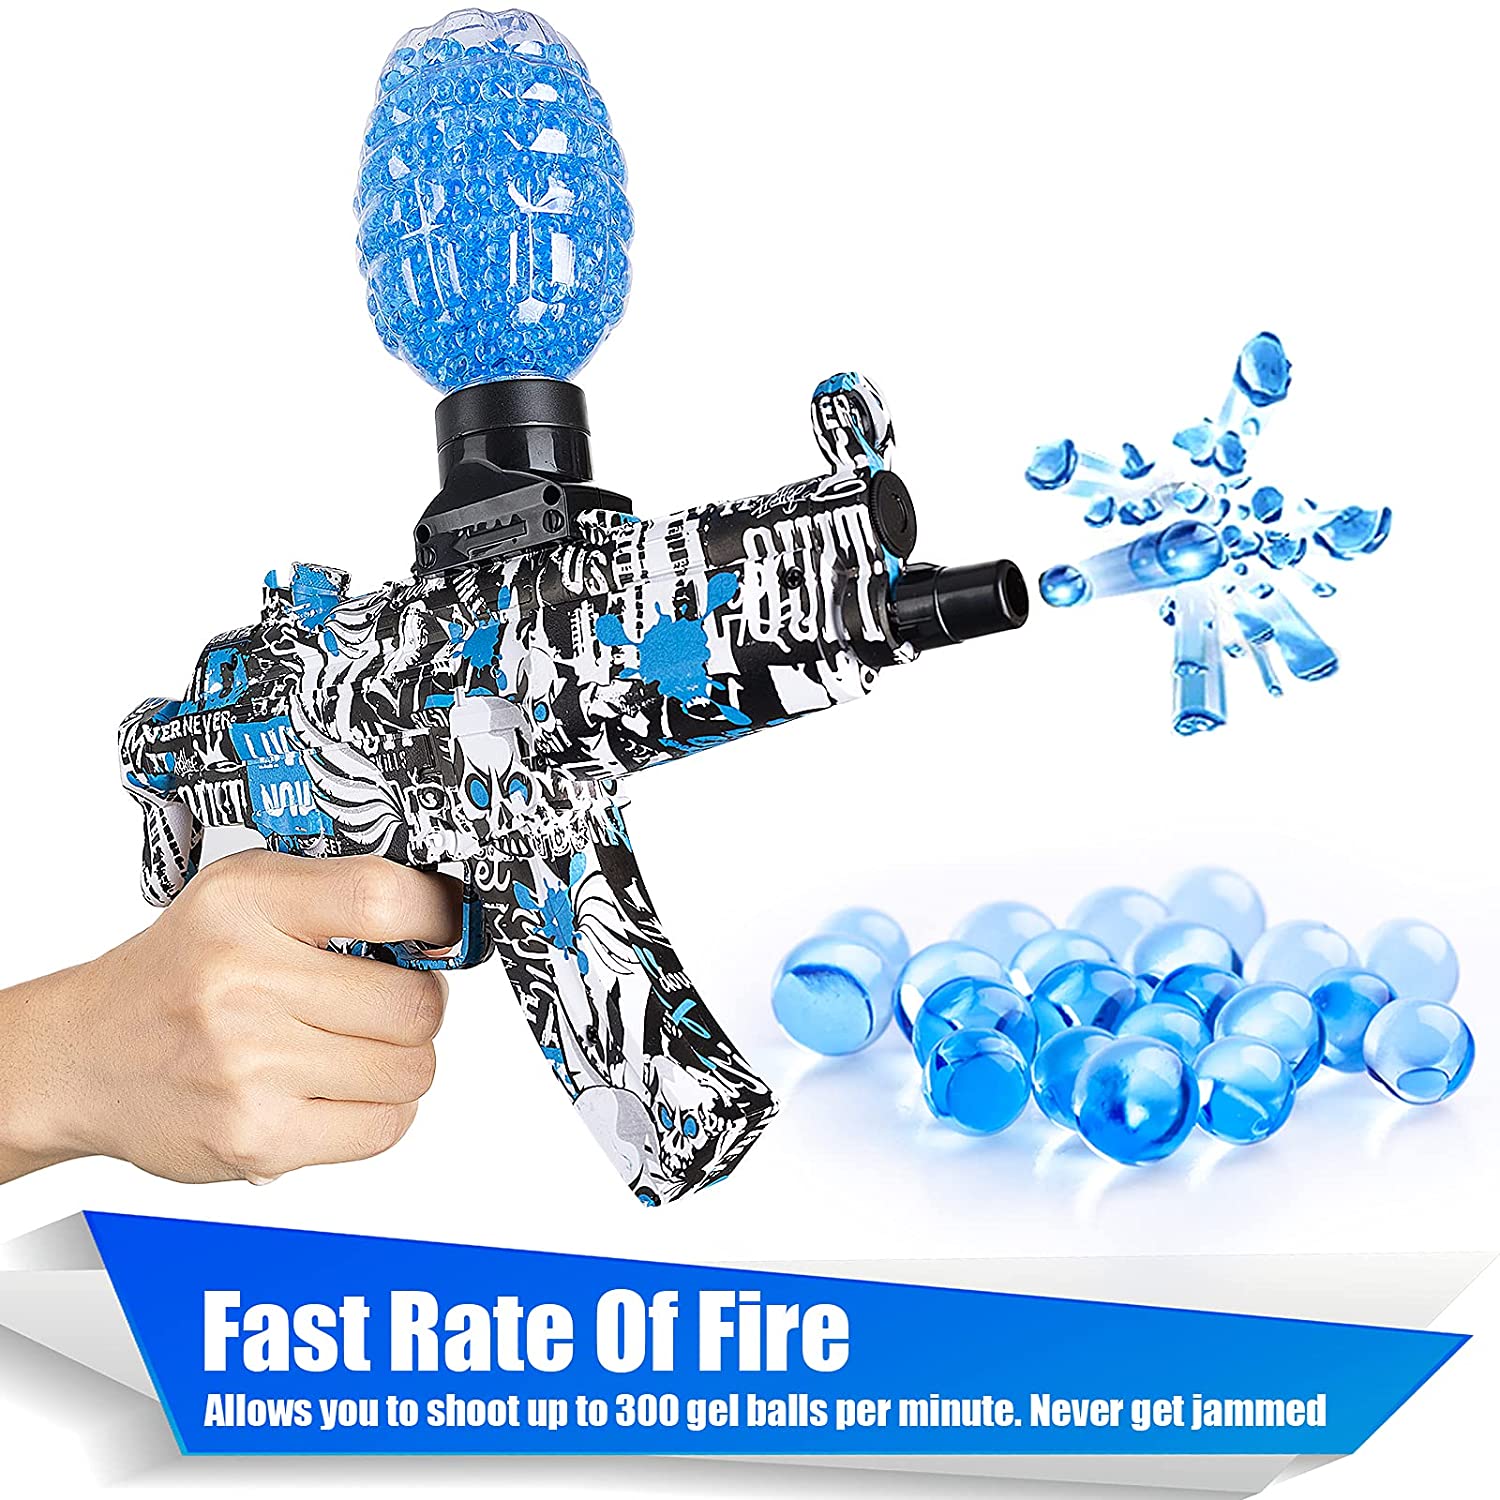 Airsoft Splatter Blaster Gun, Outdoor Indoor Best Gift for Holidays Christmas Birthday, Gel Ball Blaster Splatter Toy, Water Gun Electric Automatic Outdoor Activity